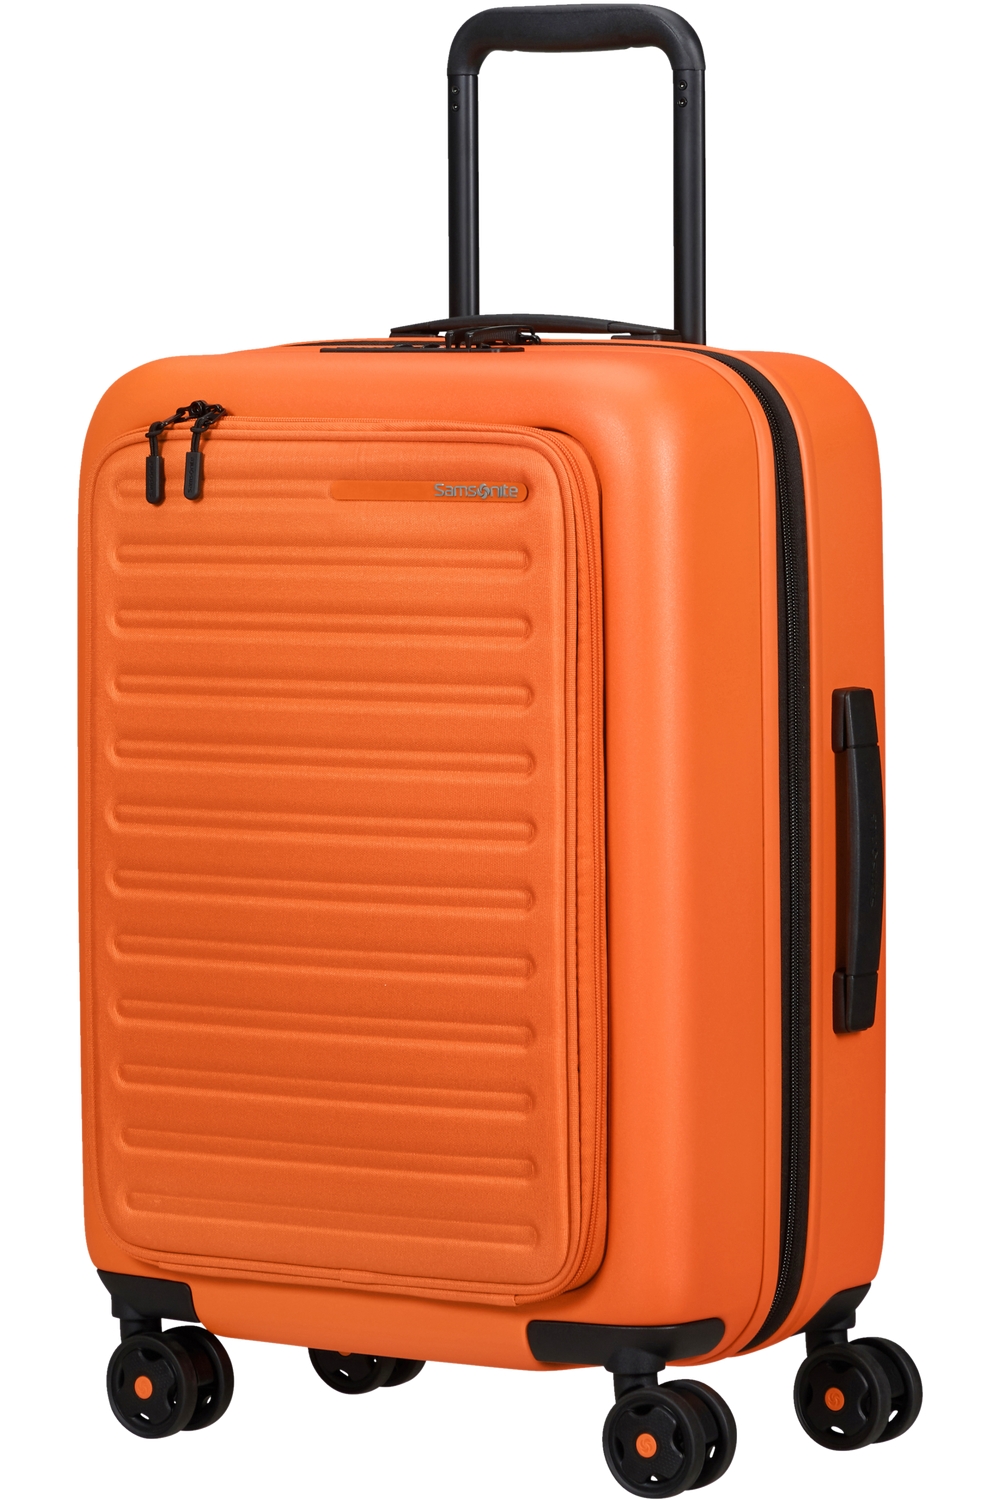 SAMSONITE Kufr StackD Spinner Expander 55/20 Easy Access Cabin Orange, 23 x 40 x 55 (135418/1641)